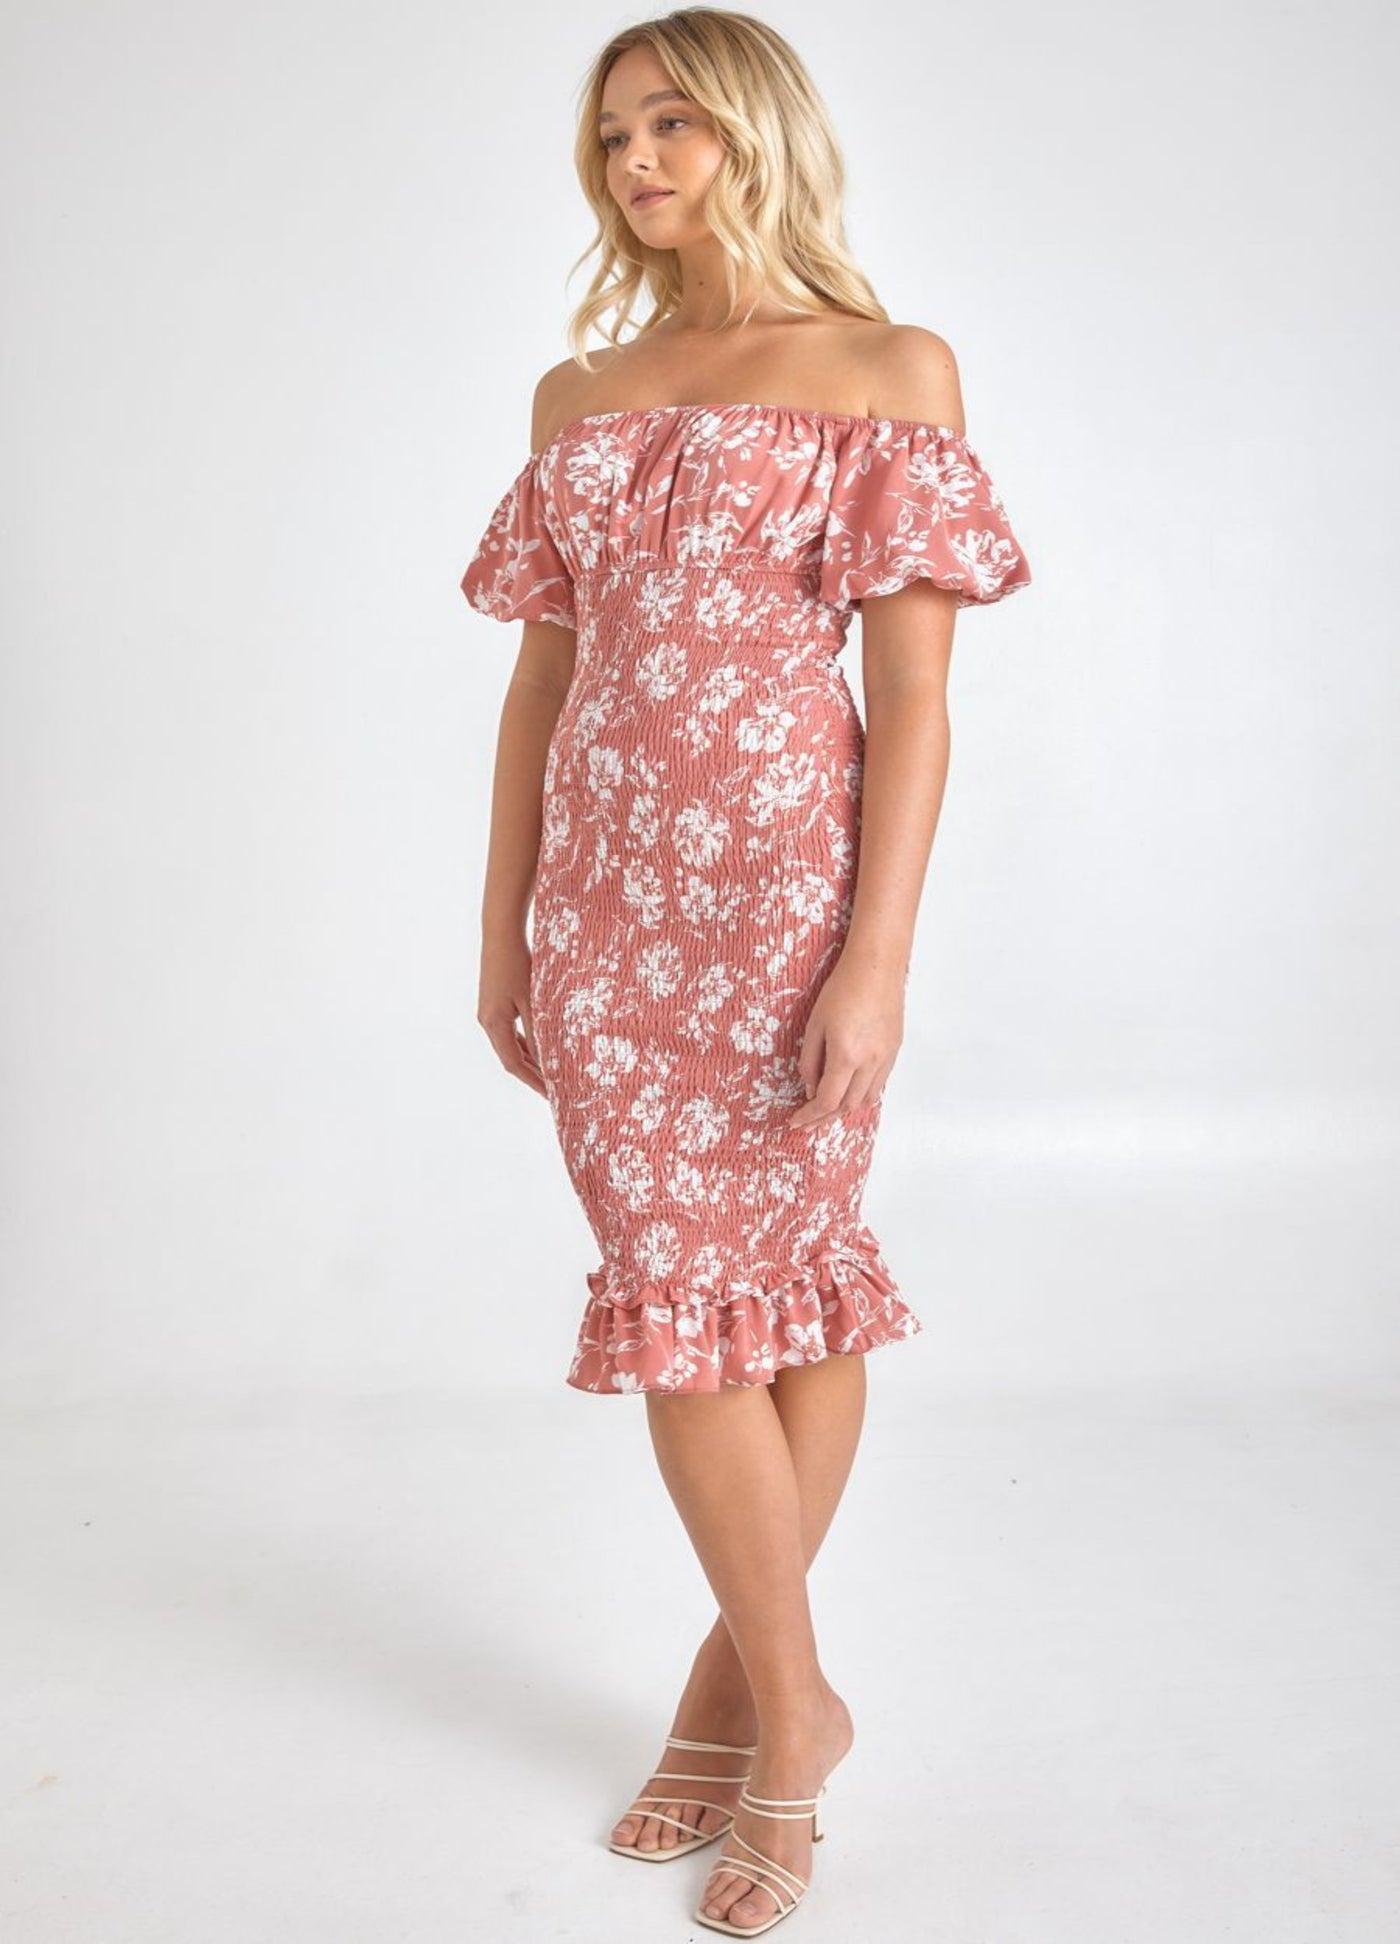 Rose print midi dress on blonde model